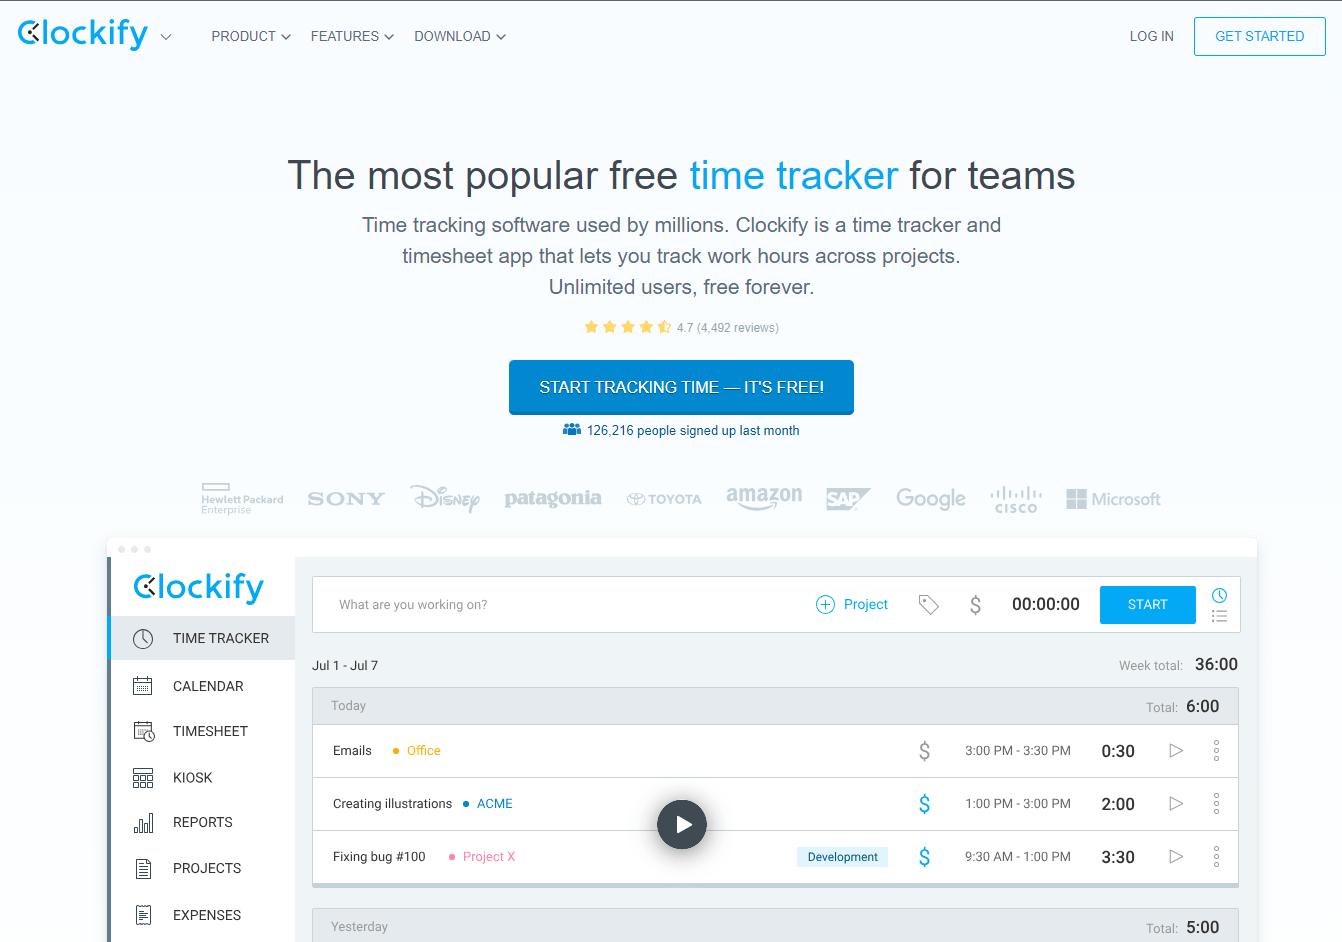 Clockify website home page screenshot.